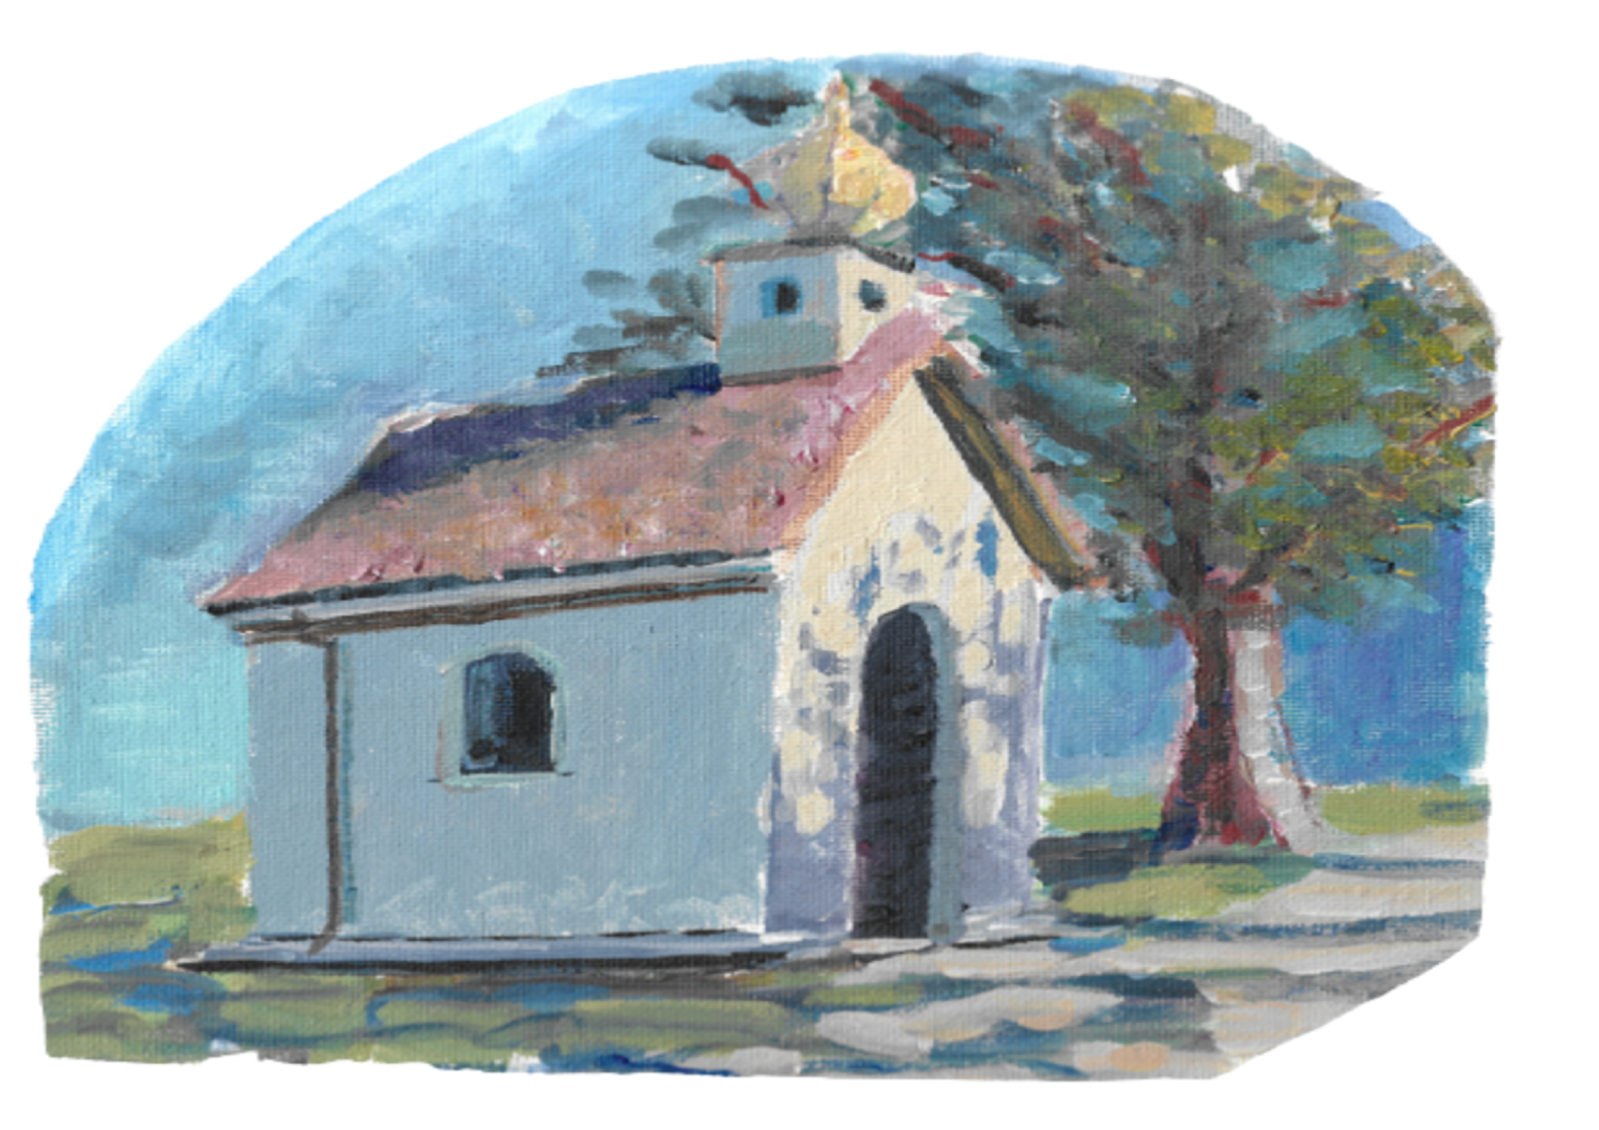 chapel